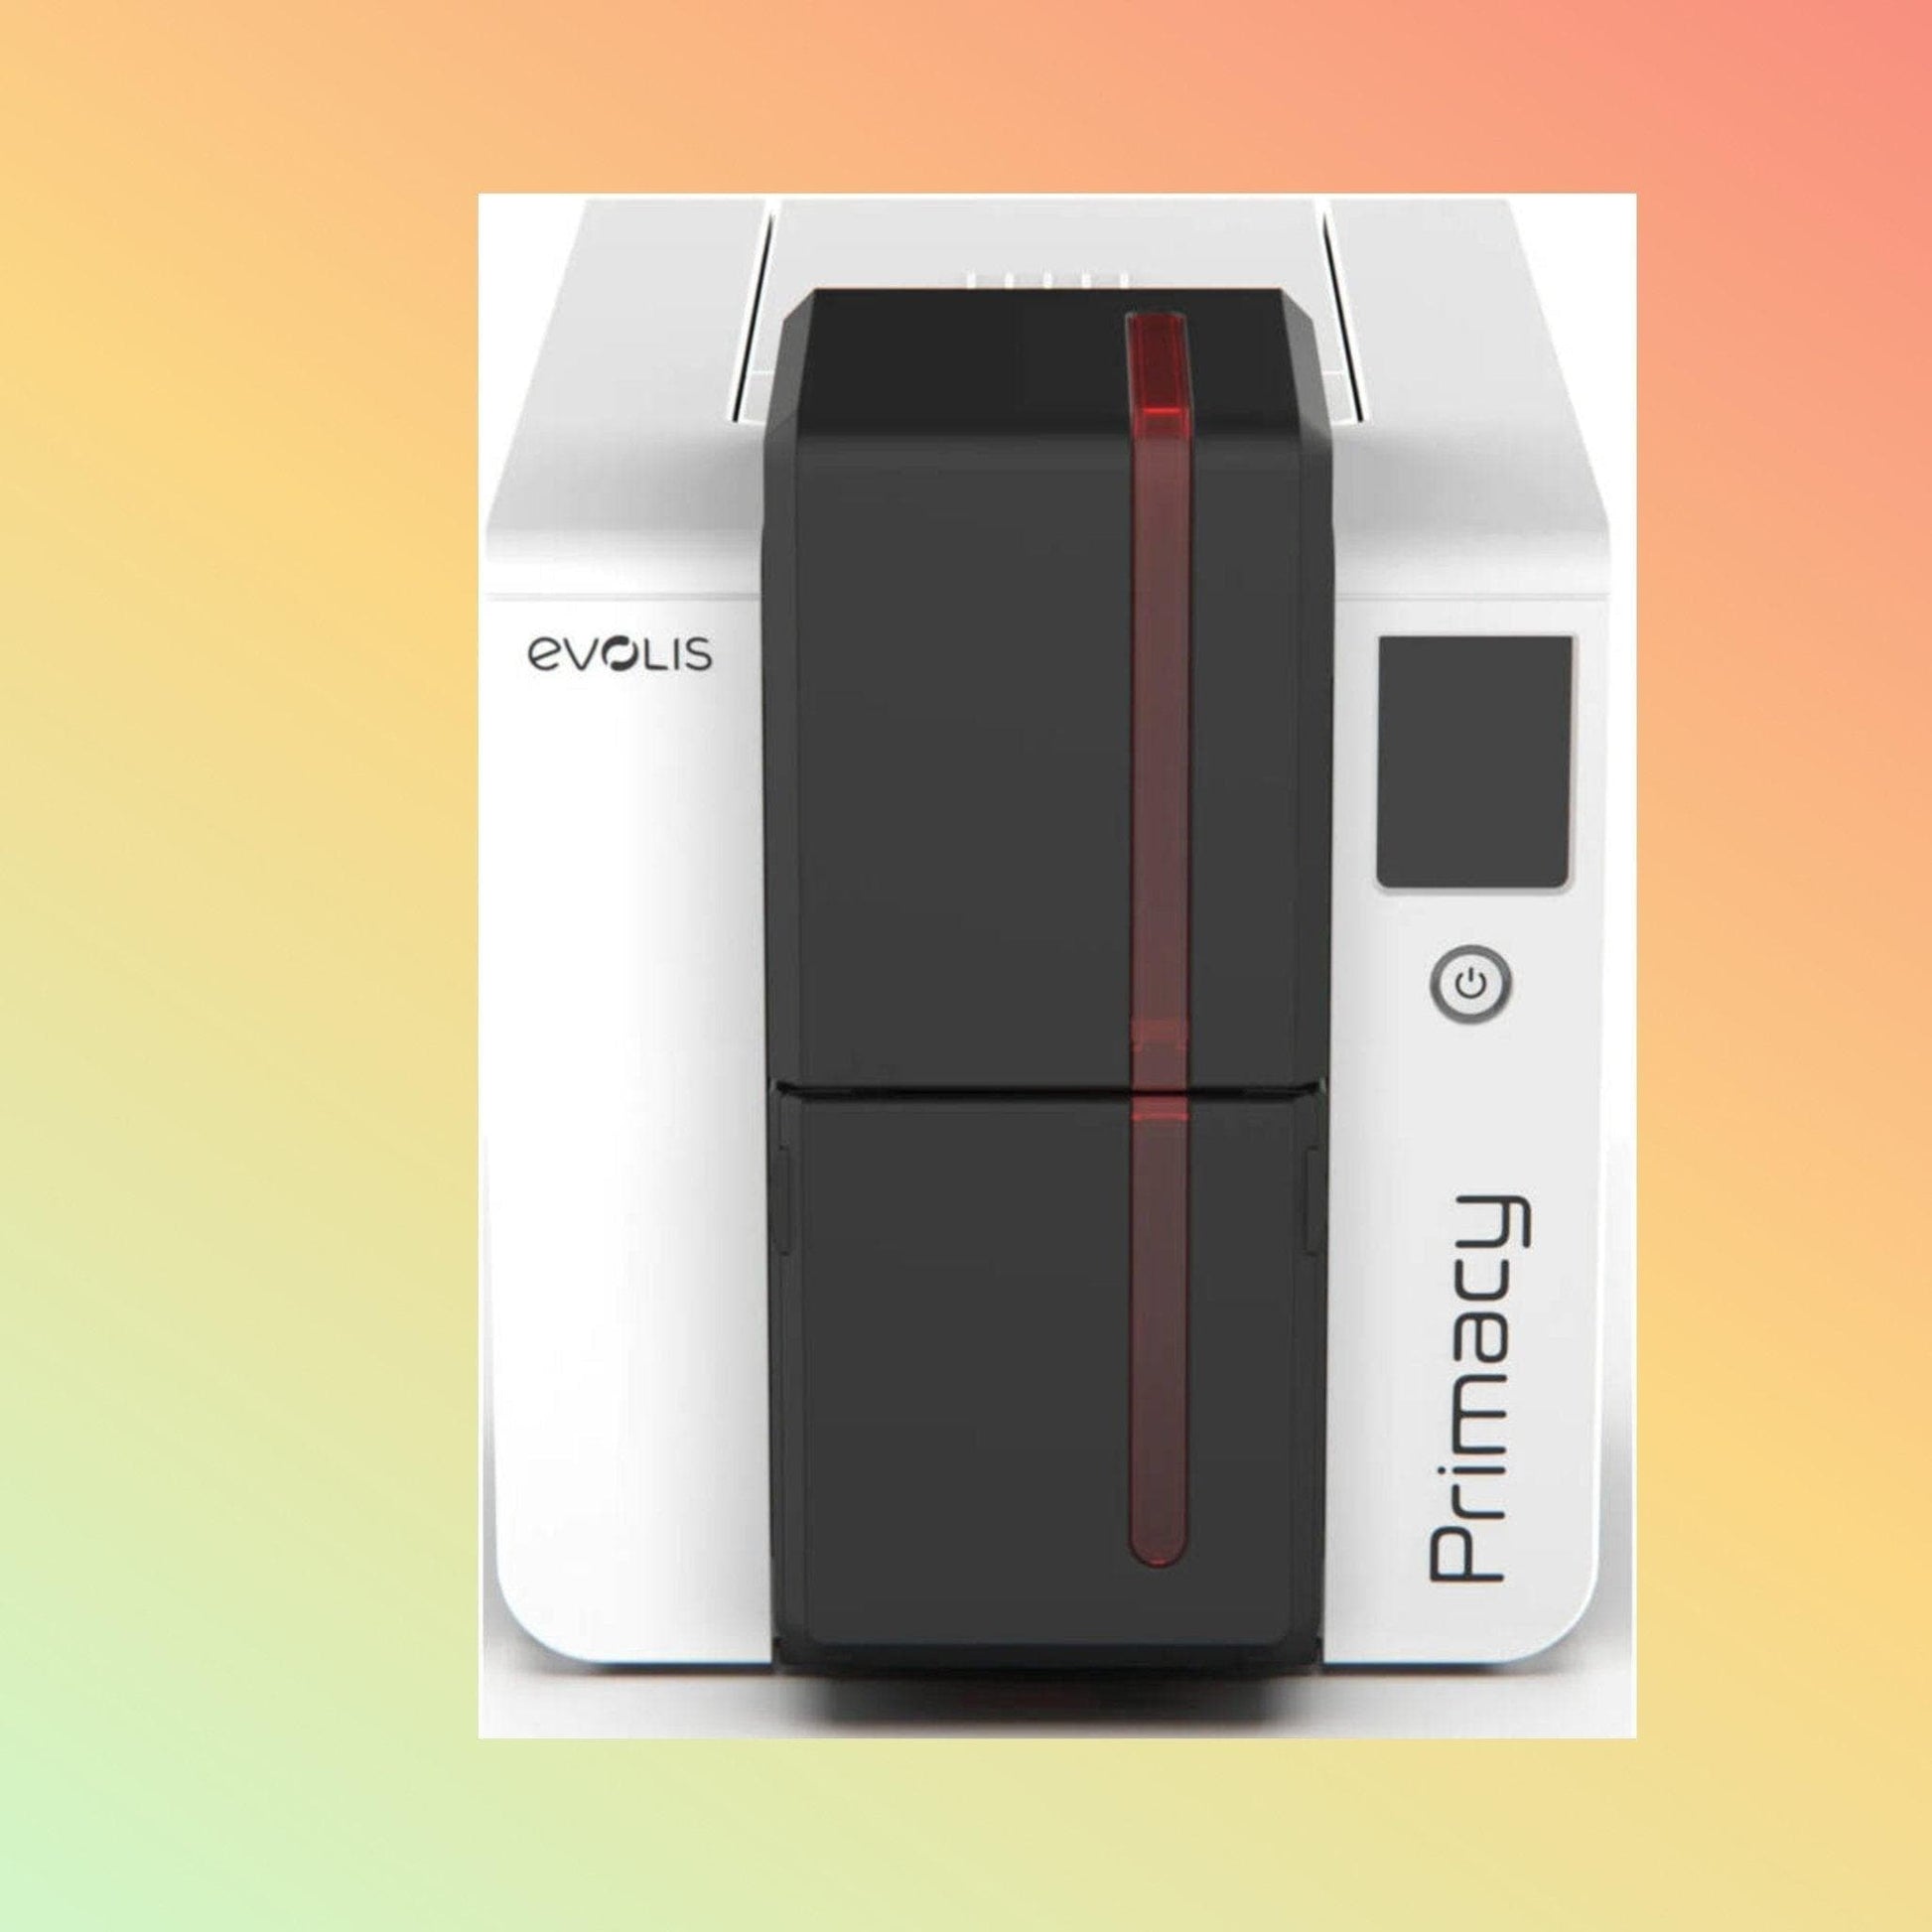 Idcard Printer - Evolis Primacy 2 Expert Dual-Sided ID Card Printer - Neotech